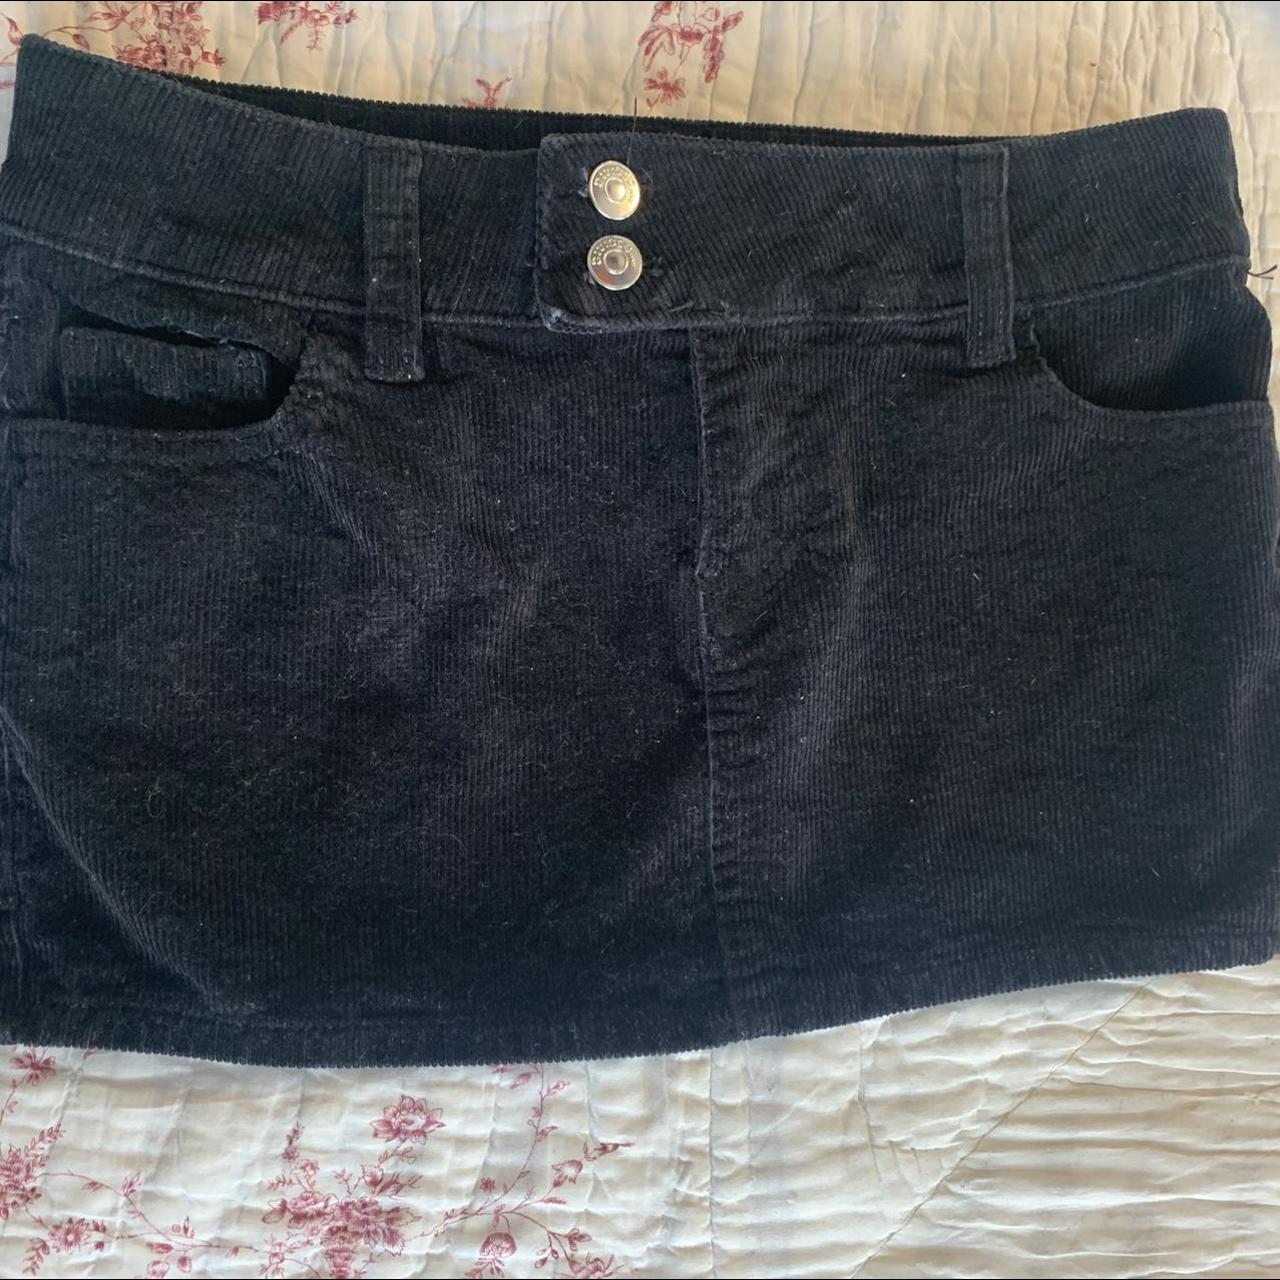 Black corduroy mini skirt. Size 6 - Depop